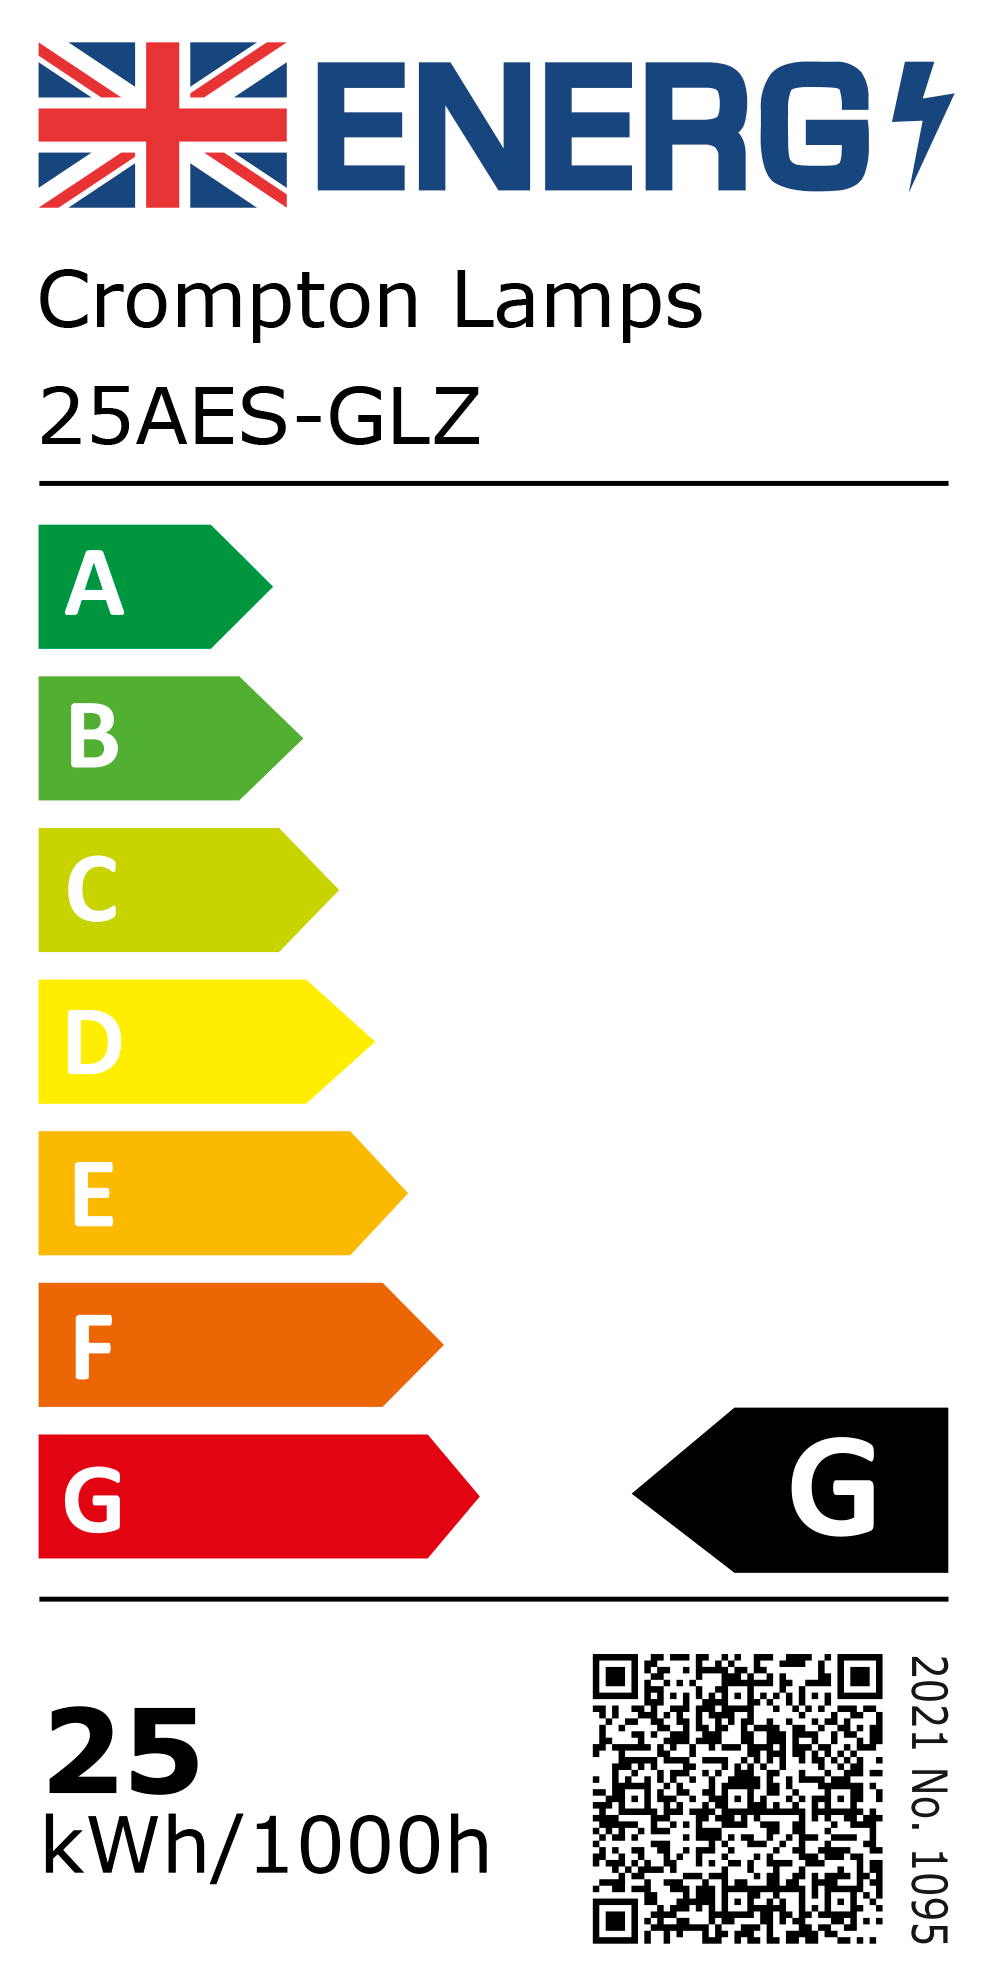 New 2021 Energy Rating Label: Stock Code 25AES-GLZ